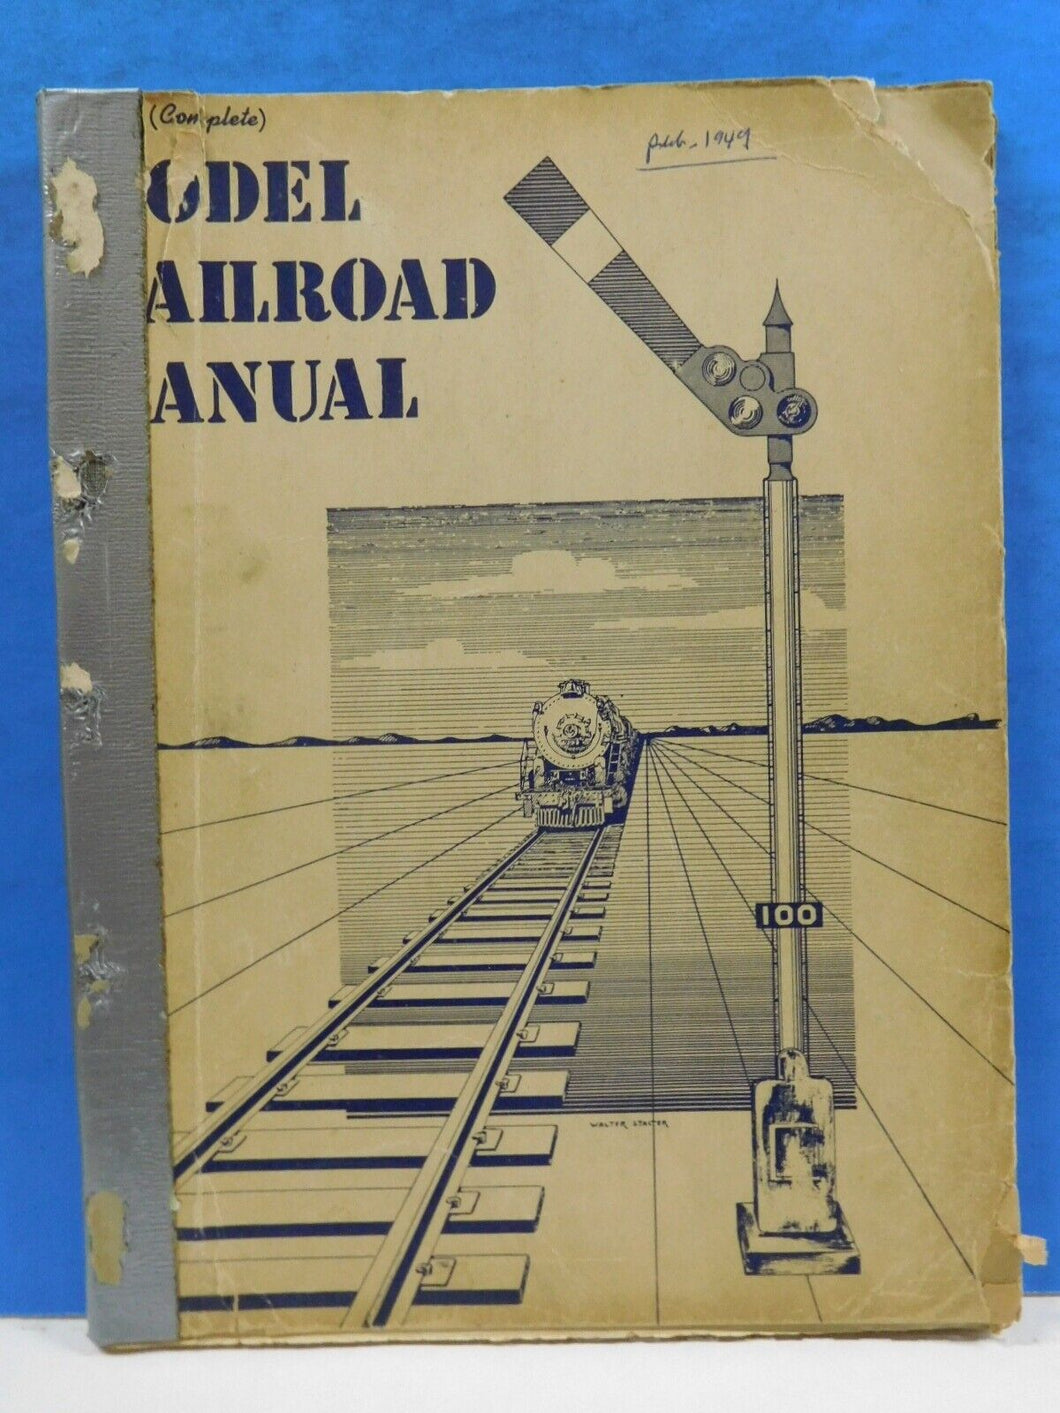 Model Railroad Manual 1949 edition  Railroad Model Craftsman Staff